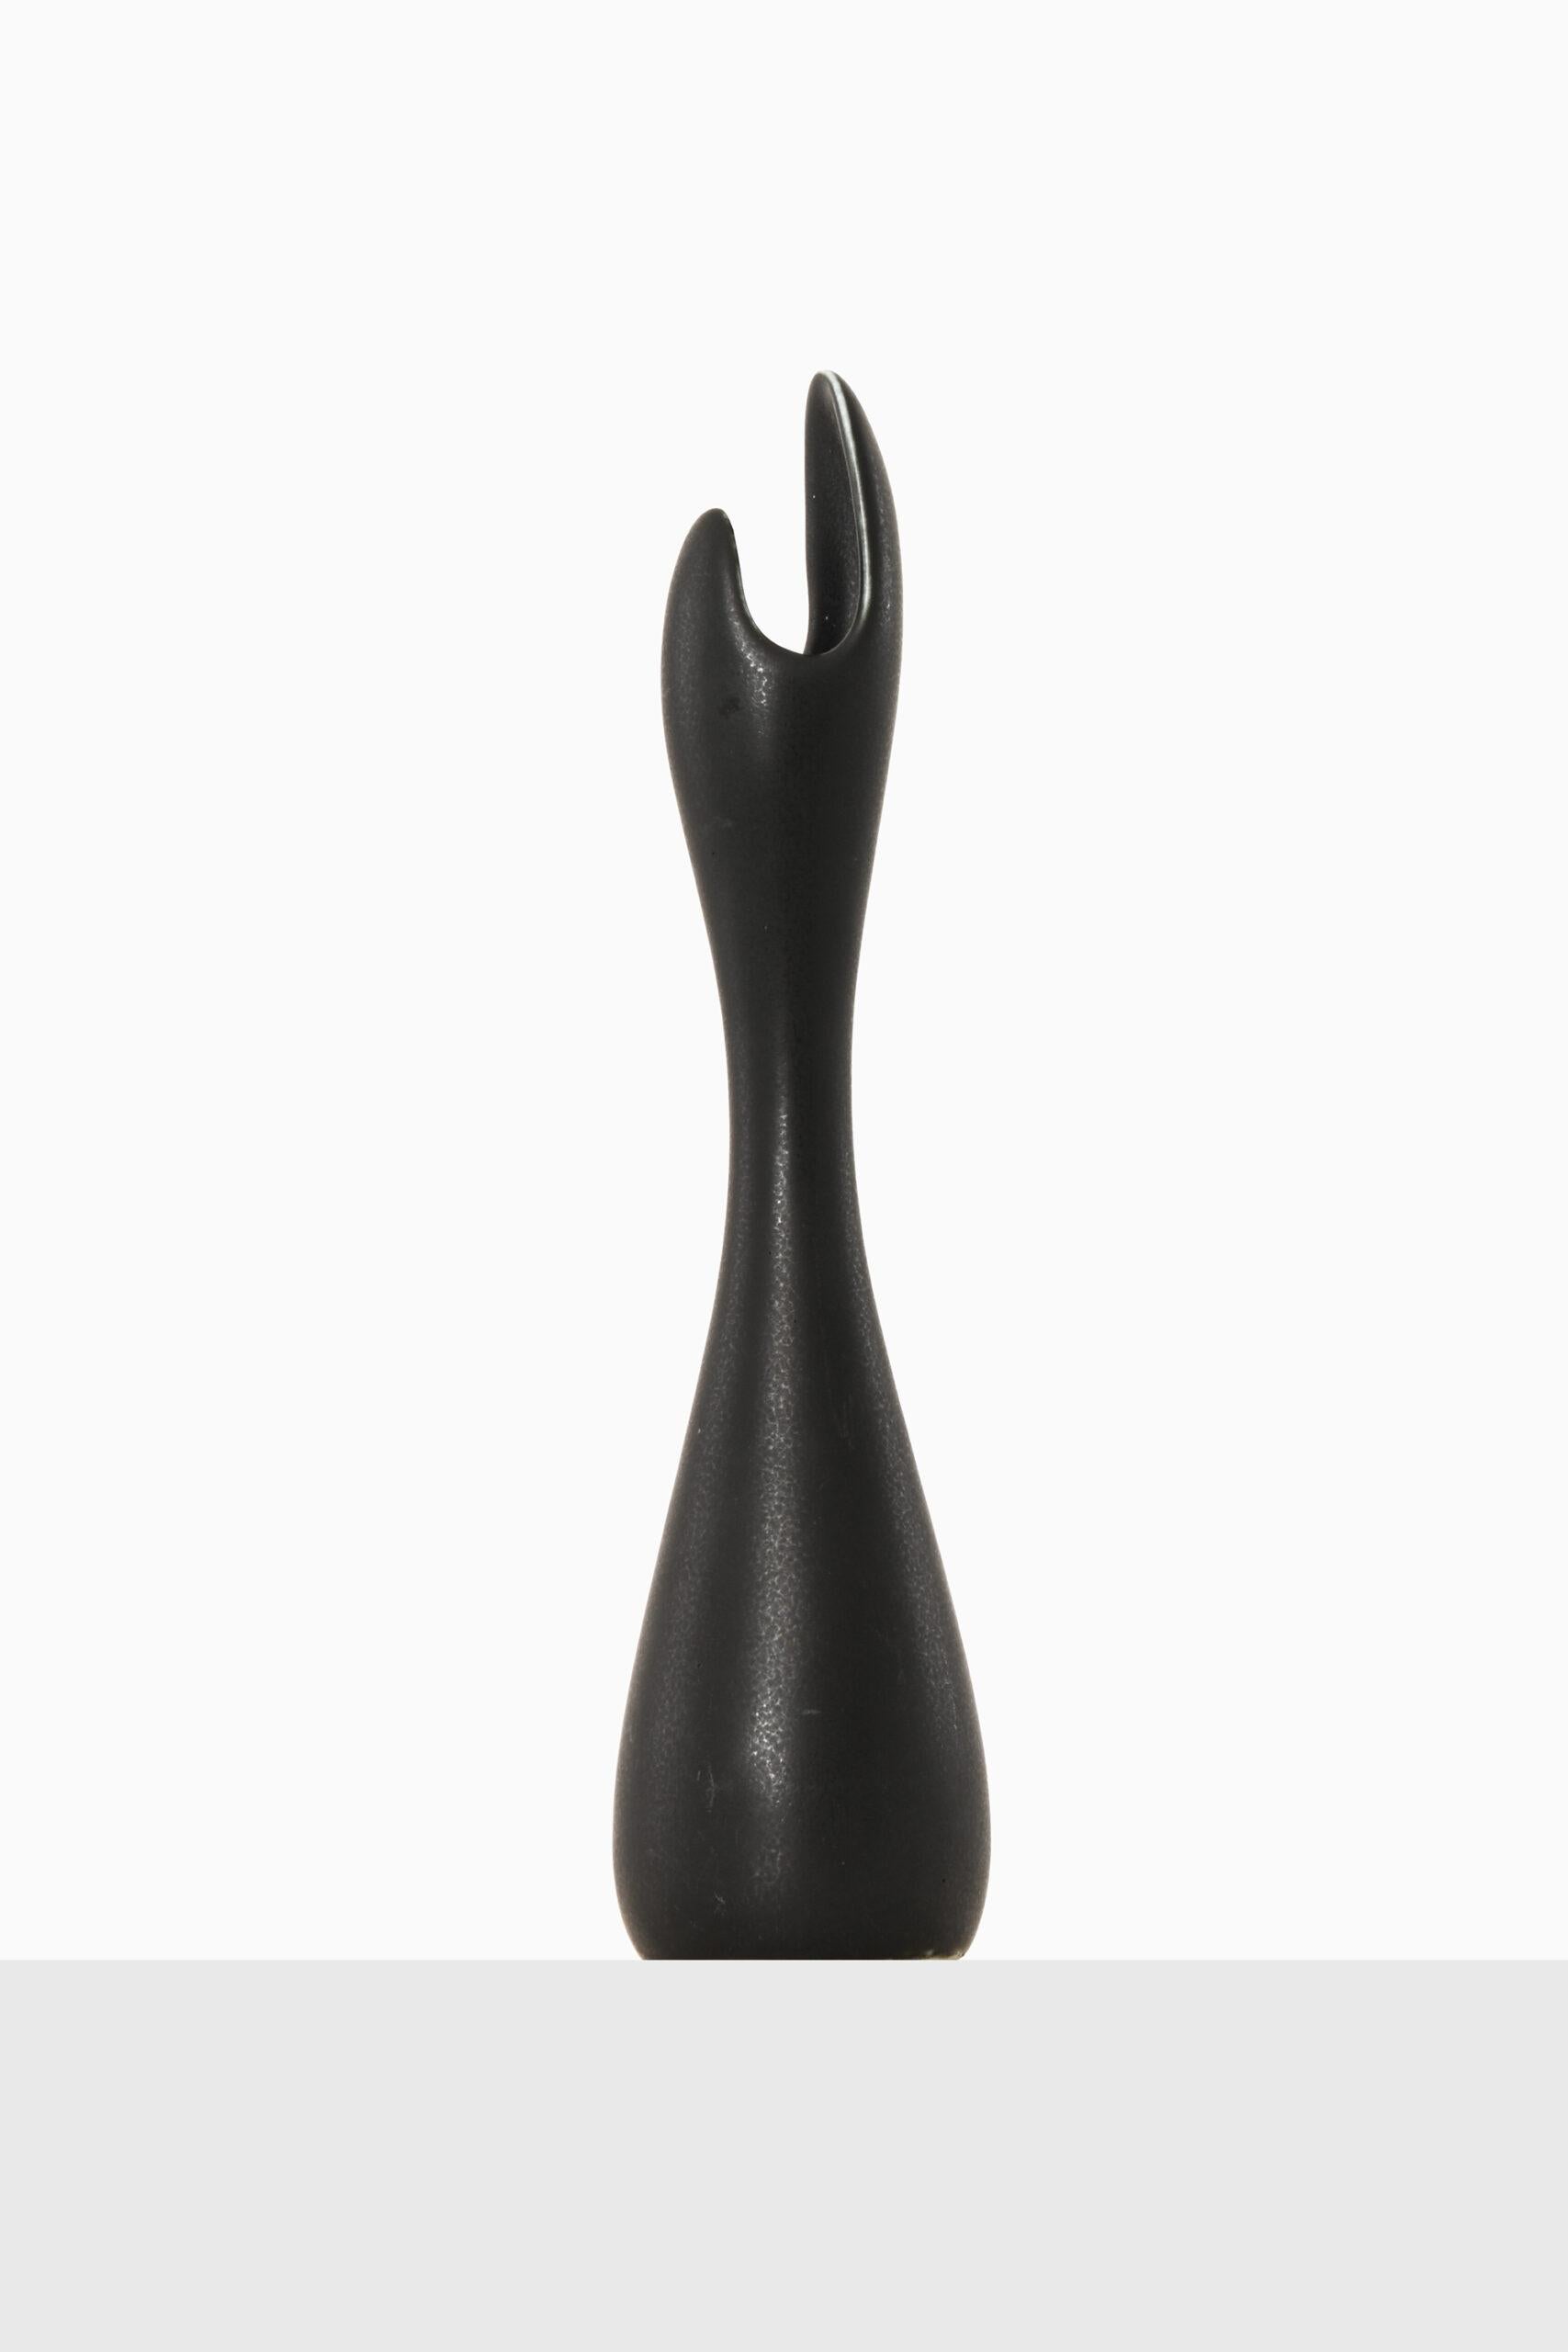 Caolina ceramic vase designed by Gunnar Nylund. Produced by Rörstrand in Sweden.